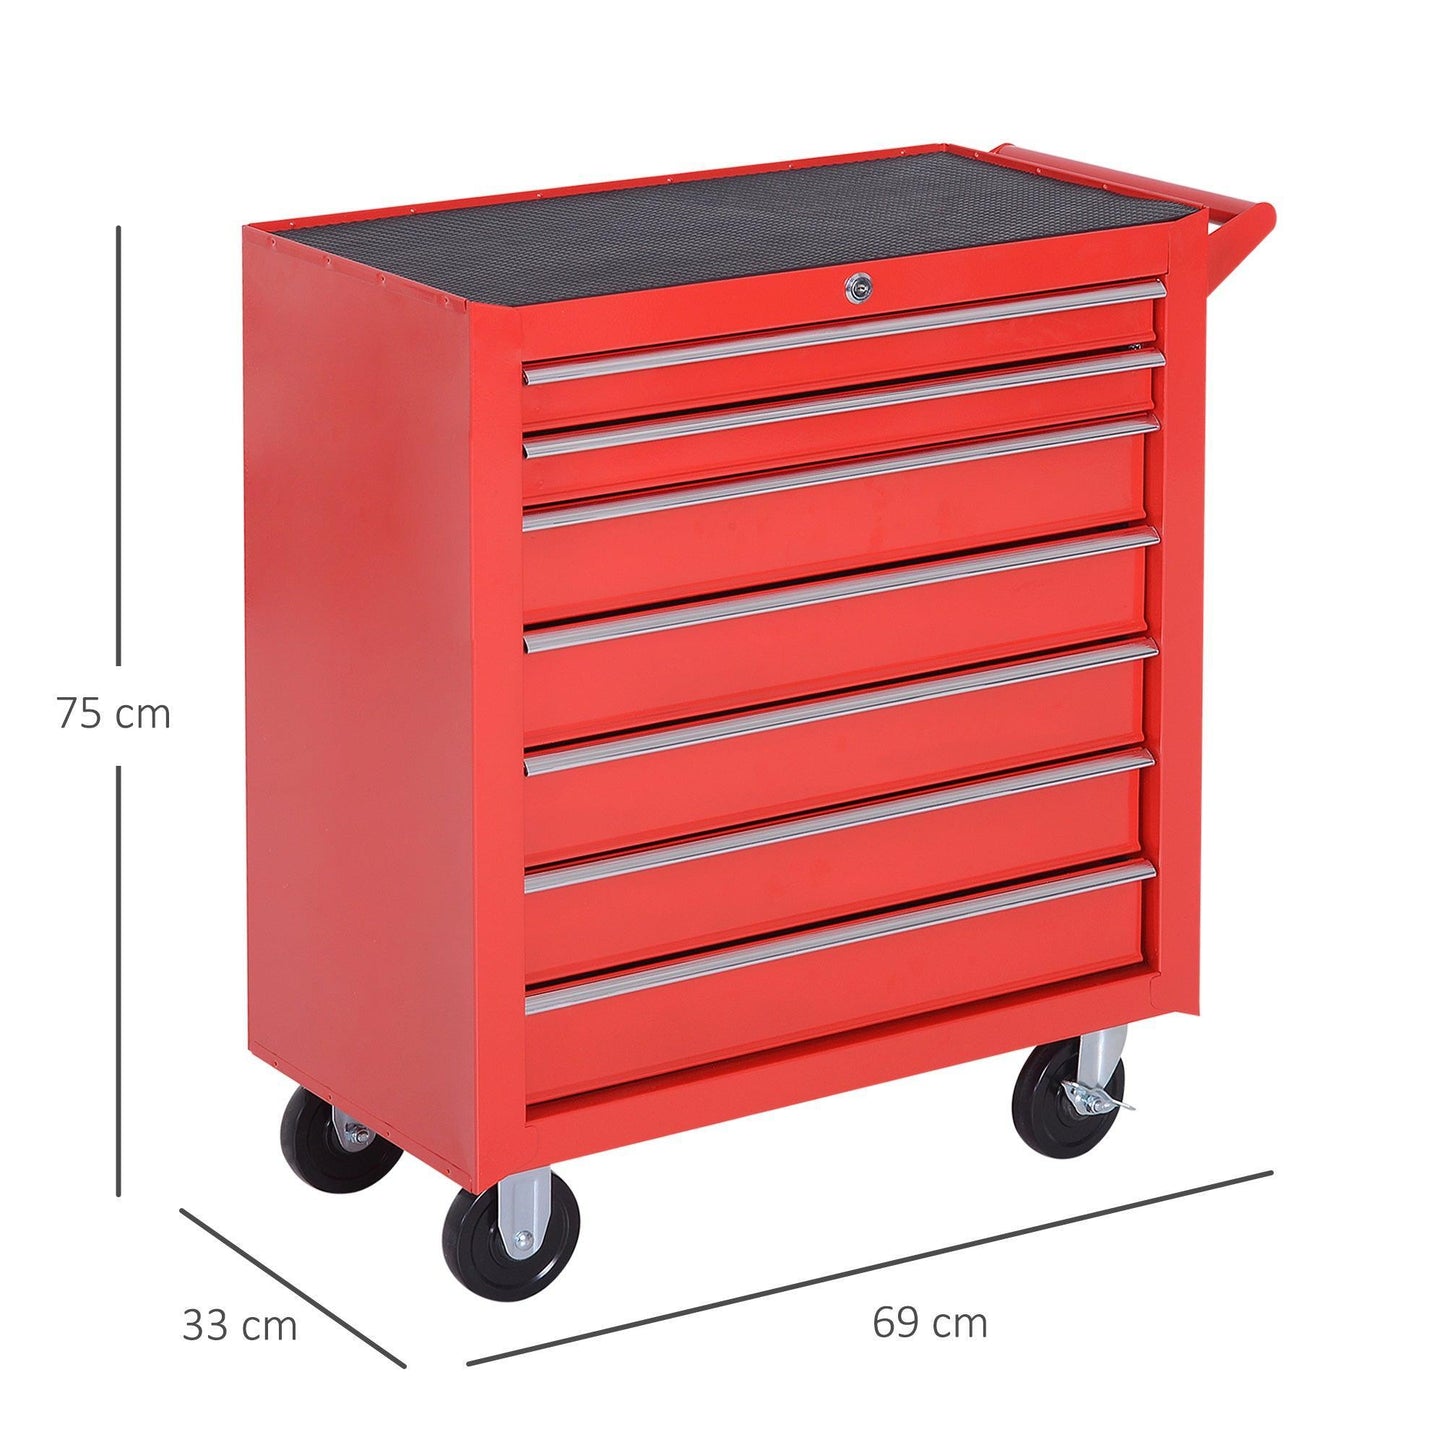 DURHAND 7-Drawer Rolling Tool Cabinet - Red - ALL4U RETAILER LTD